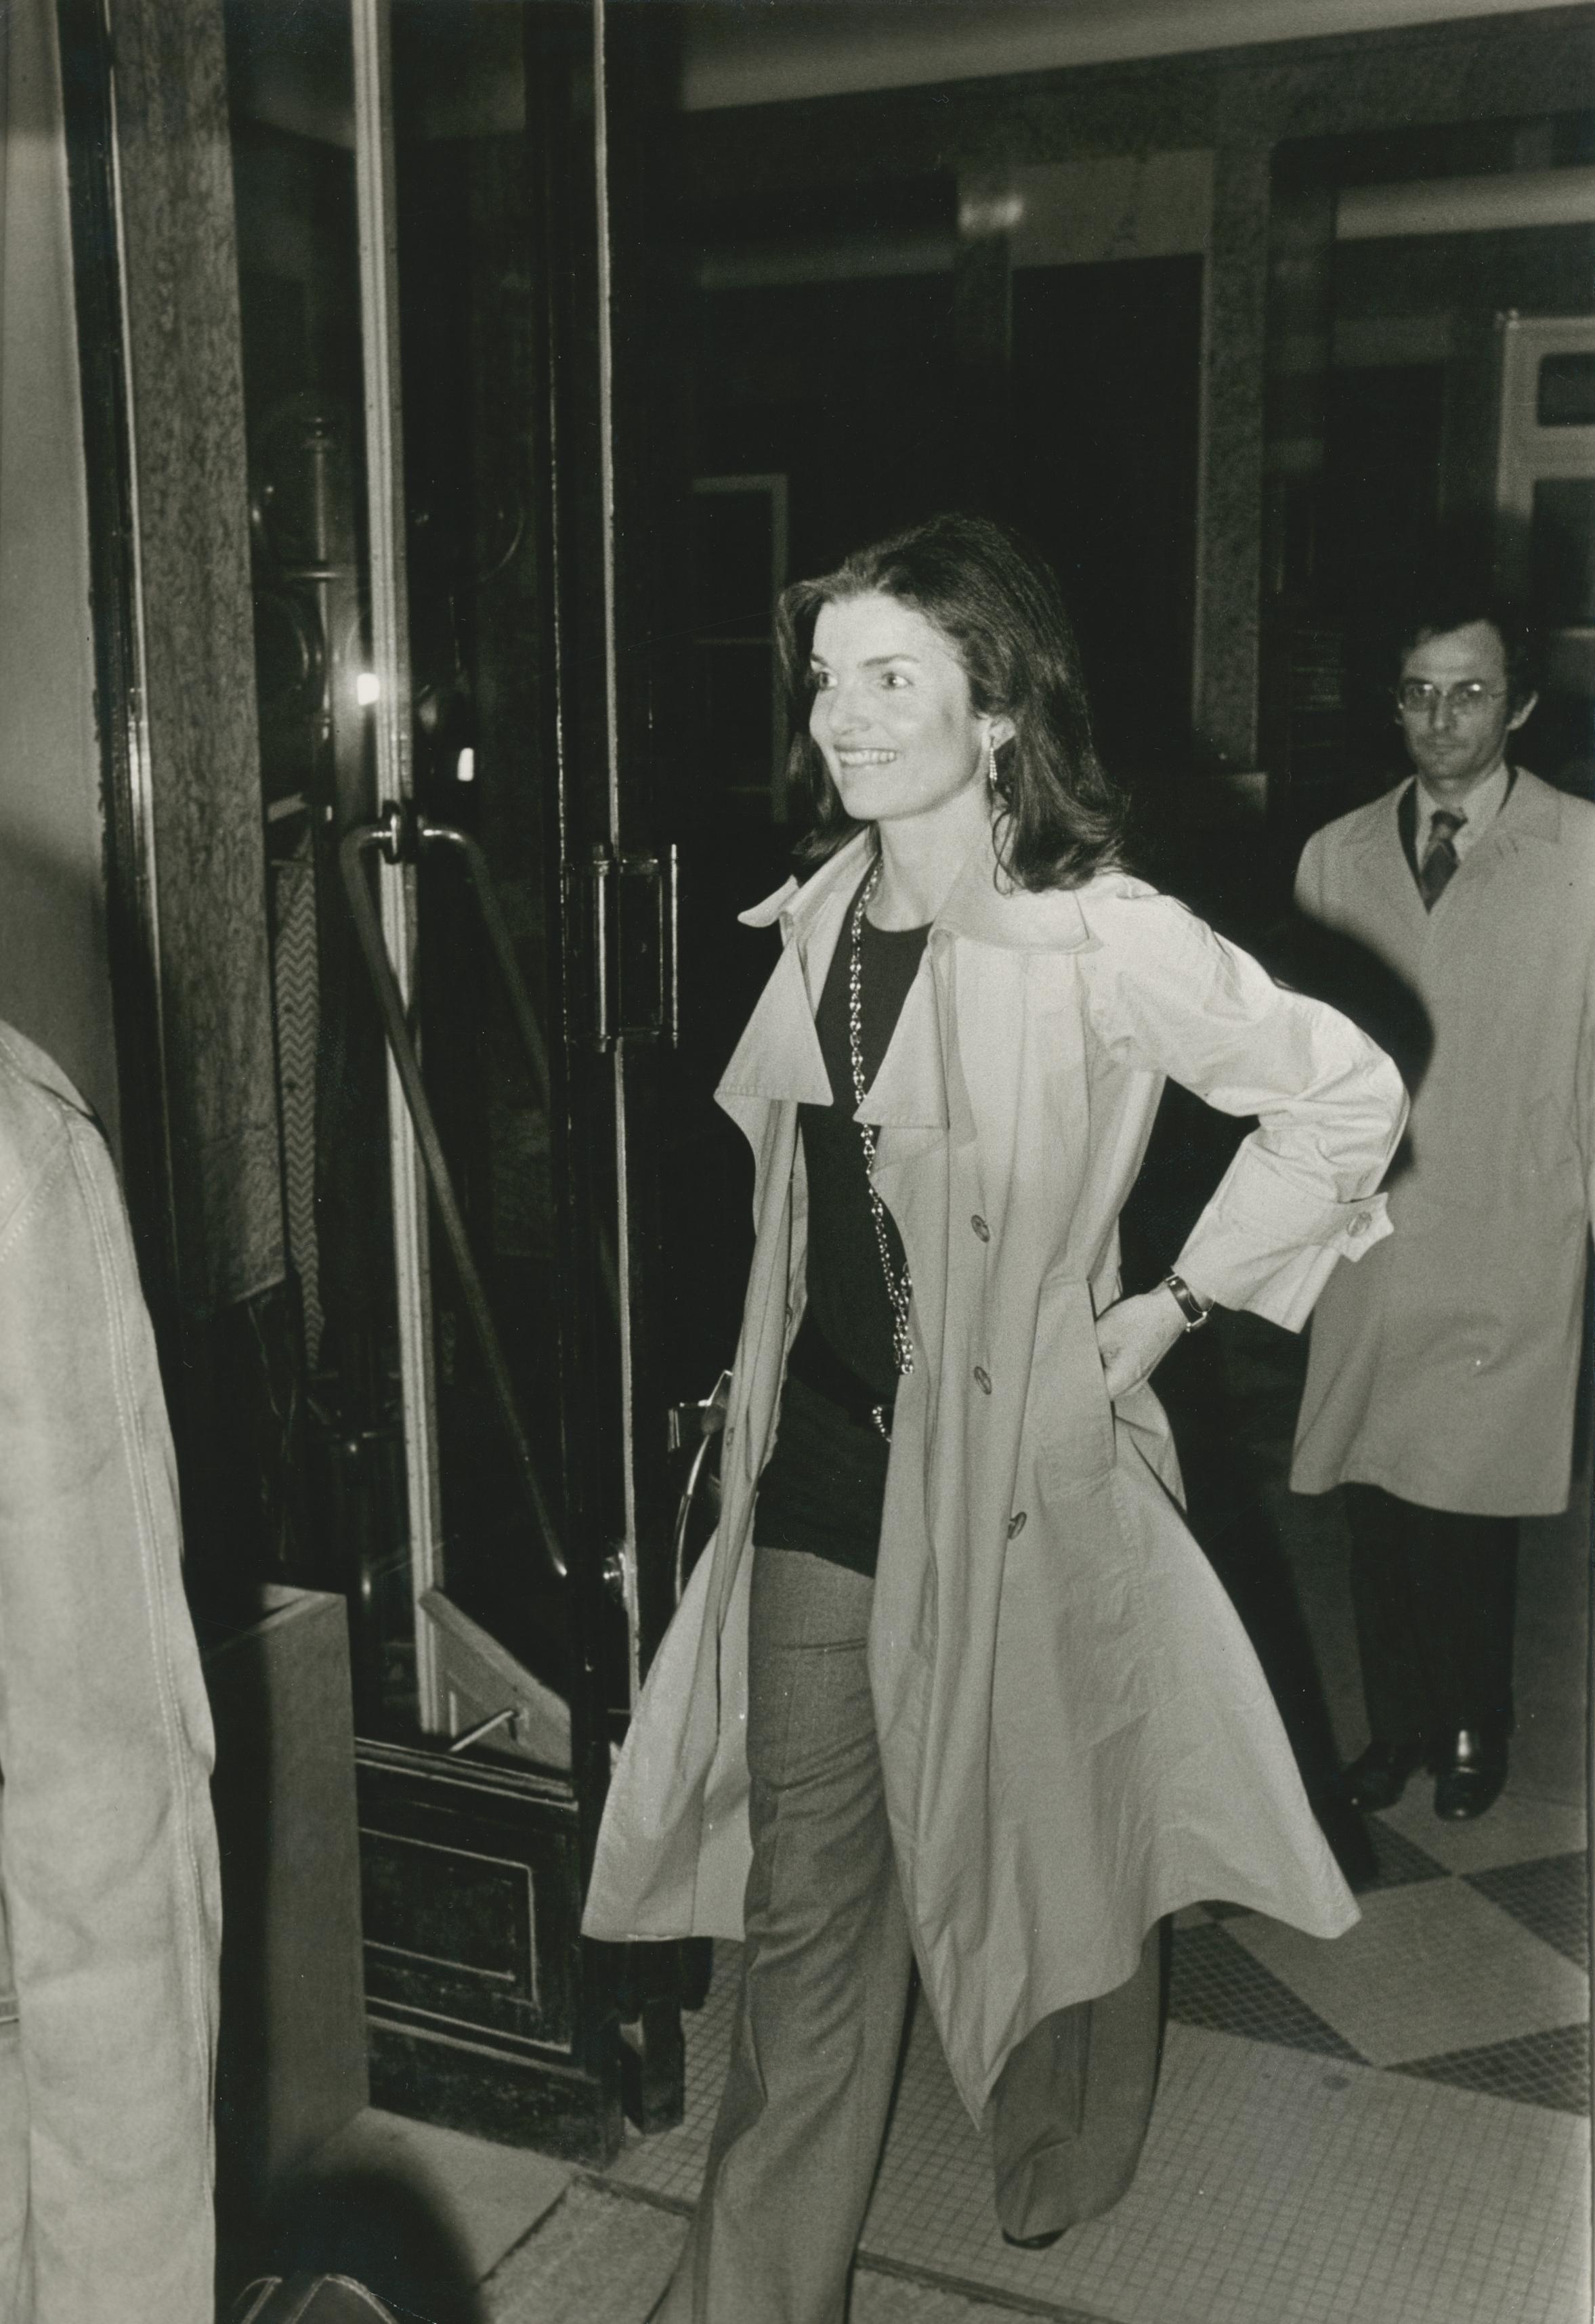 Tony Grylla Black and White Photograph – Jackie Kennedy verließ das Hospital, Paris, Frankreich, 30 x 20, 5 cm